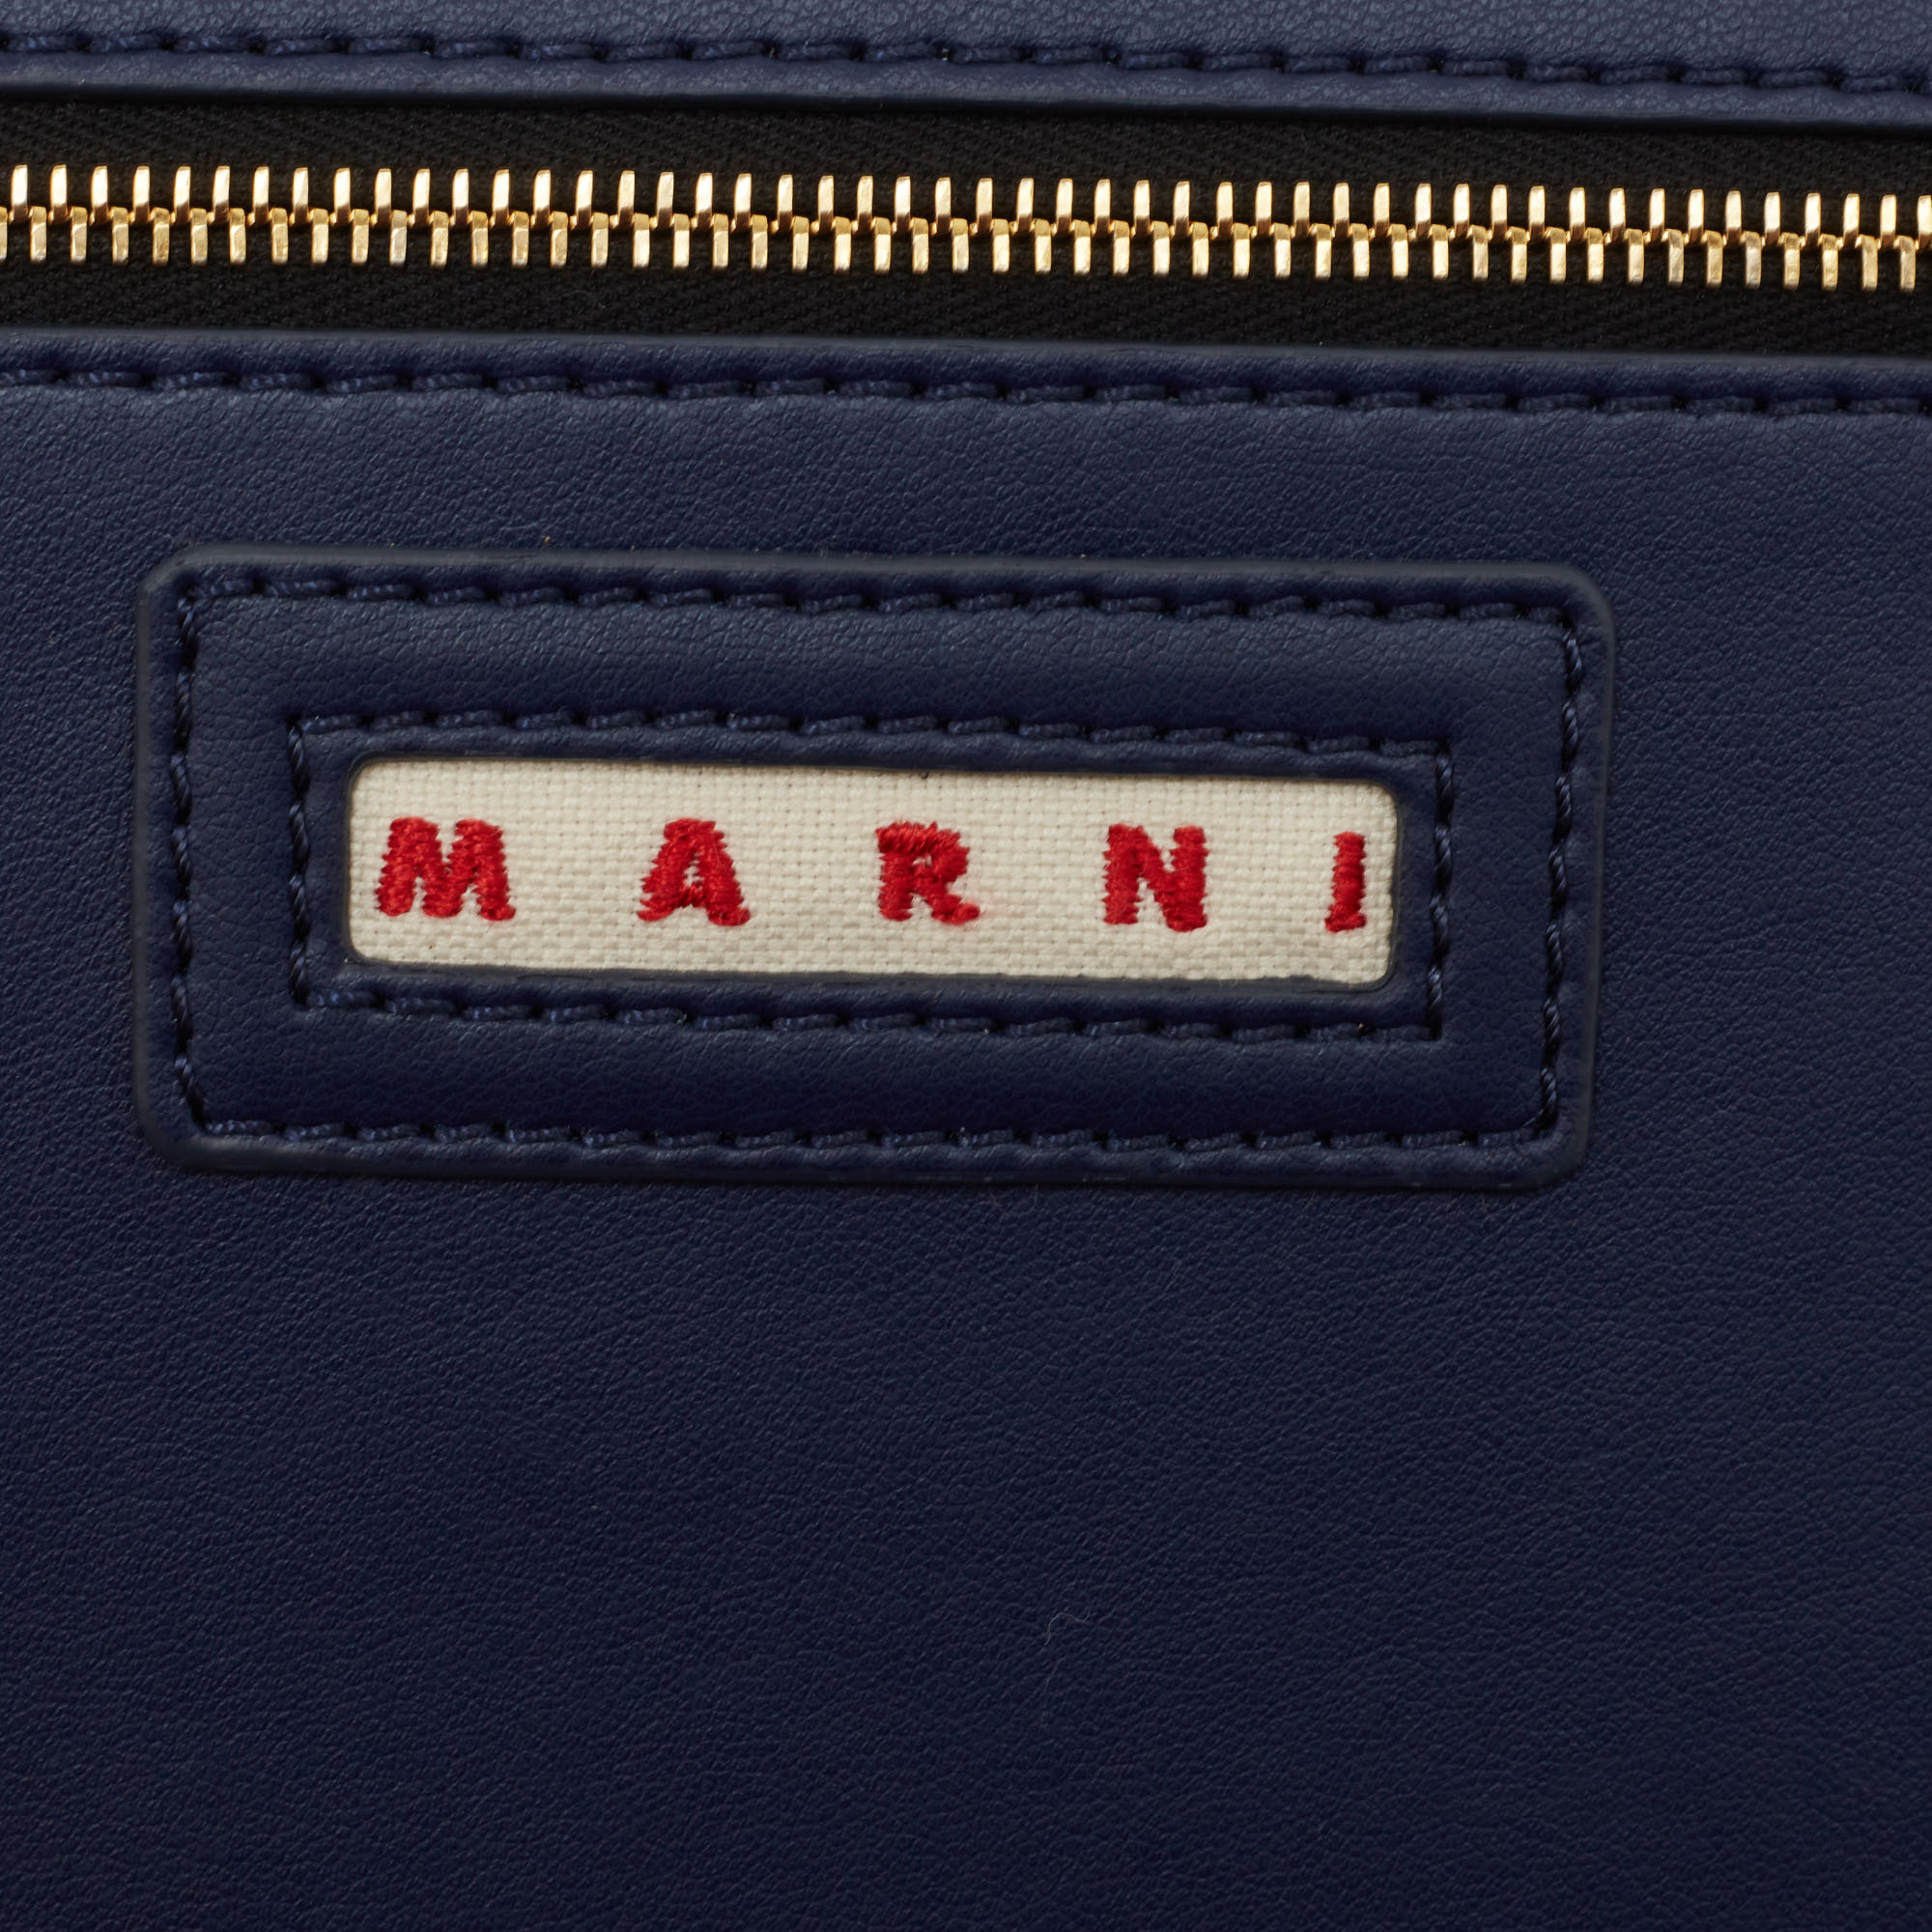 Marni Navy Blue/Brown Knit Fabric Medium Shopper Tote